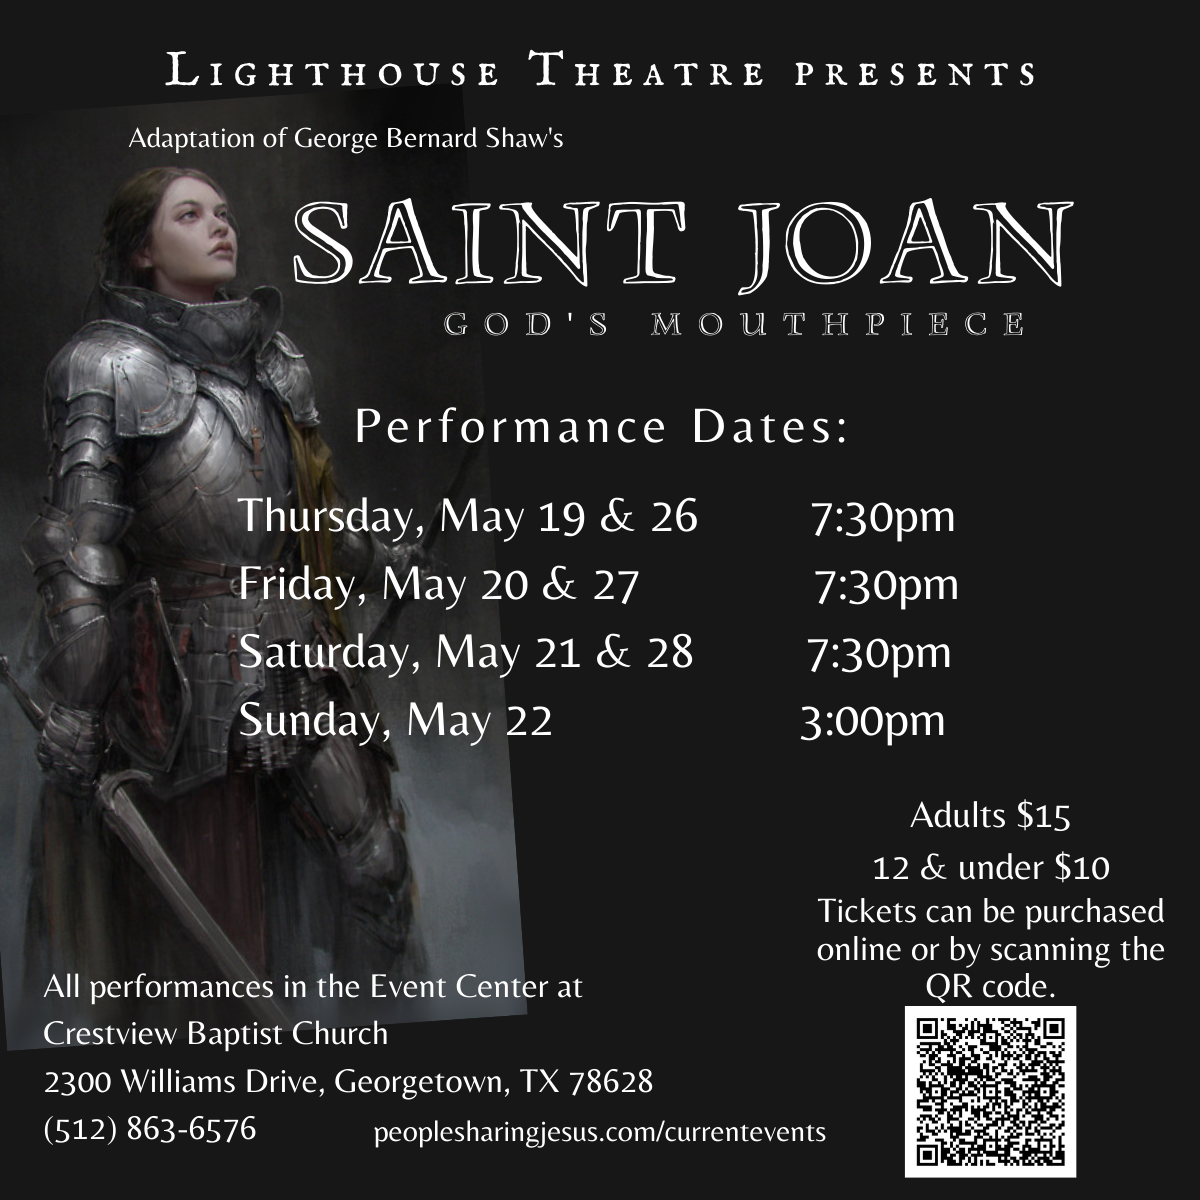 Saint Joan, God's Mouthpiece by Lighthouse Theatre